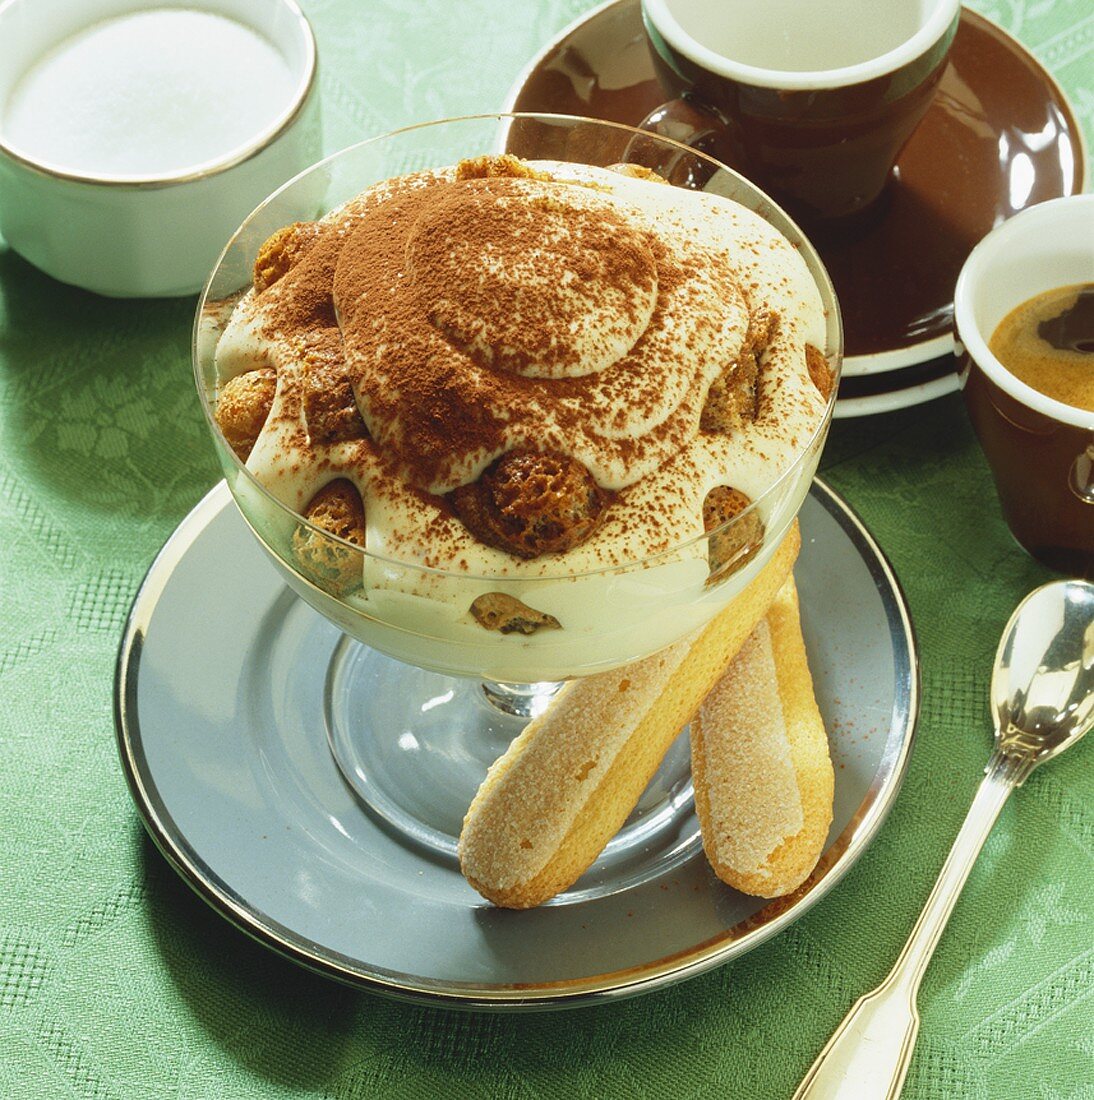 Tiramisu cream with espresso